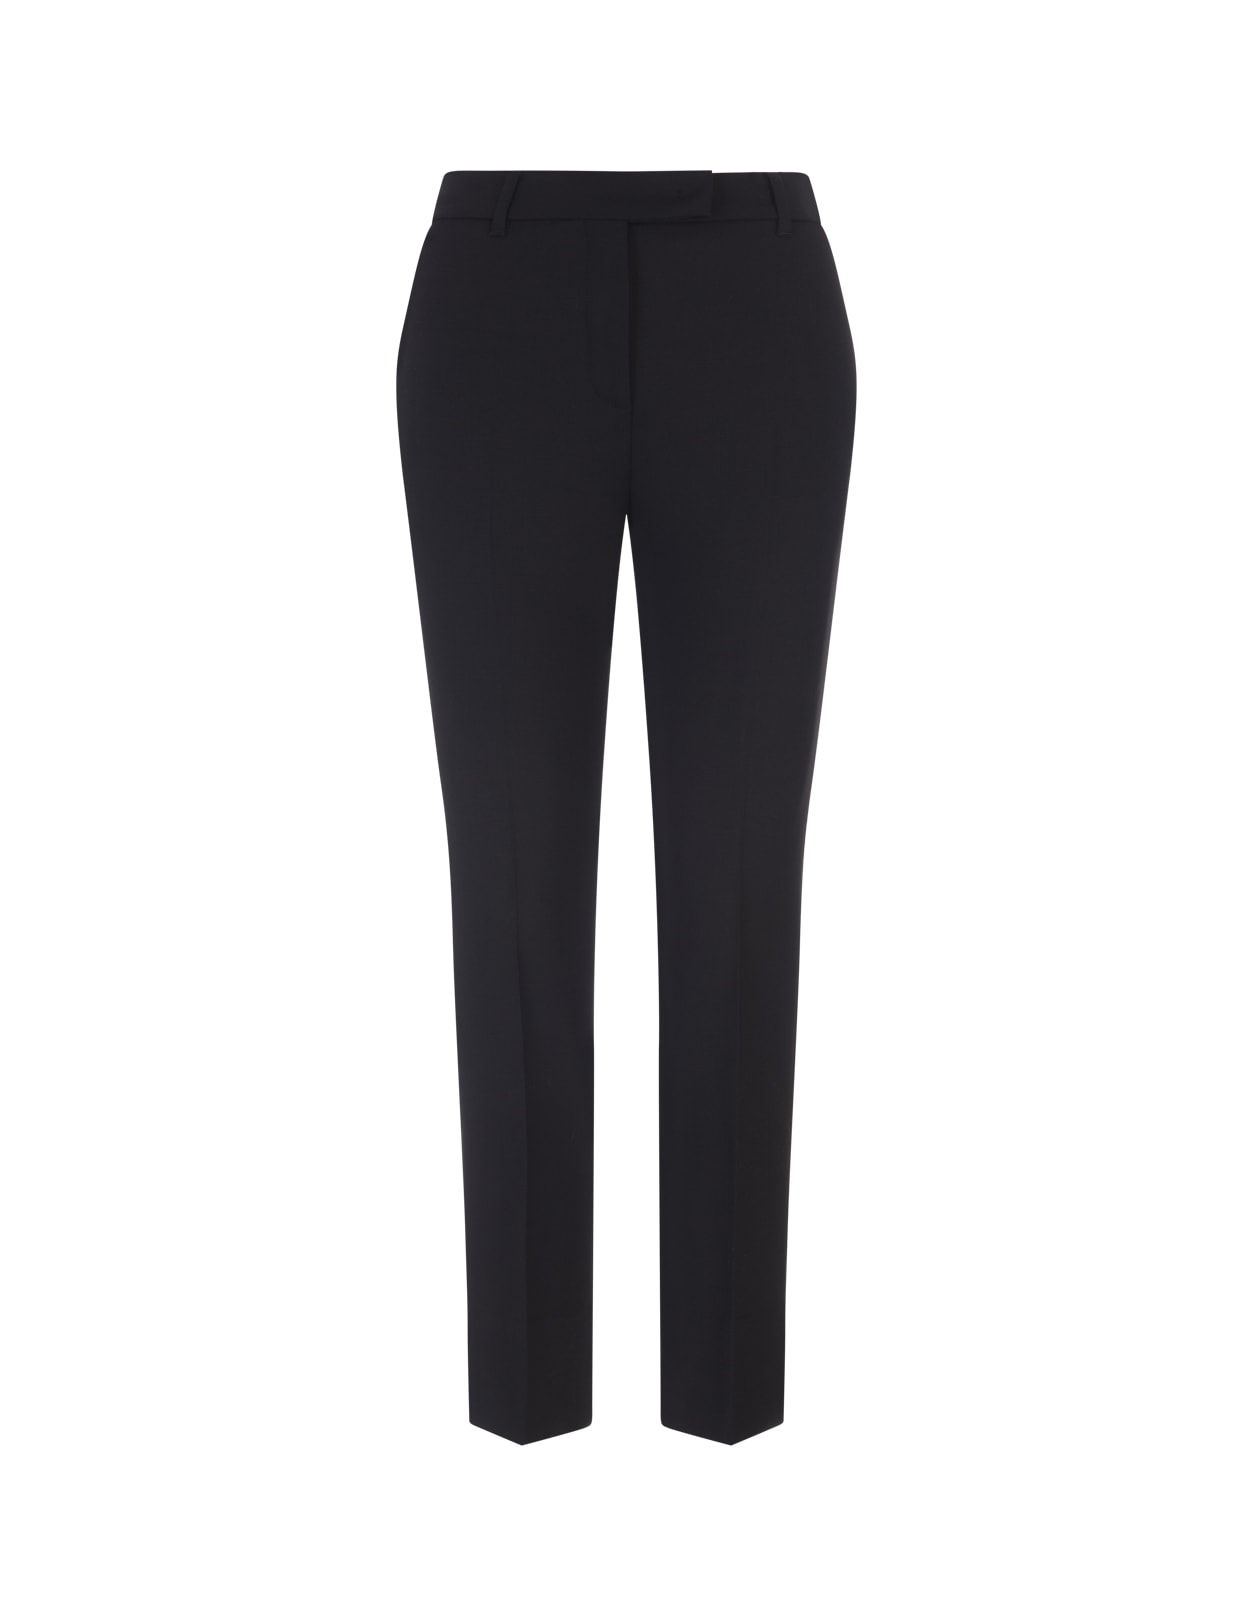 Incotex Woman Slim Fit Classic Trousers In Black Wool Blend